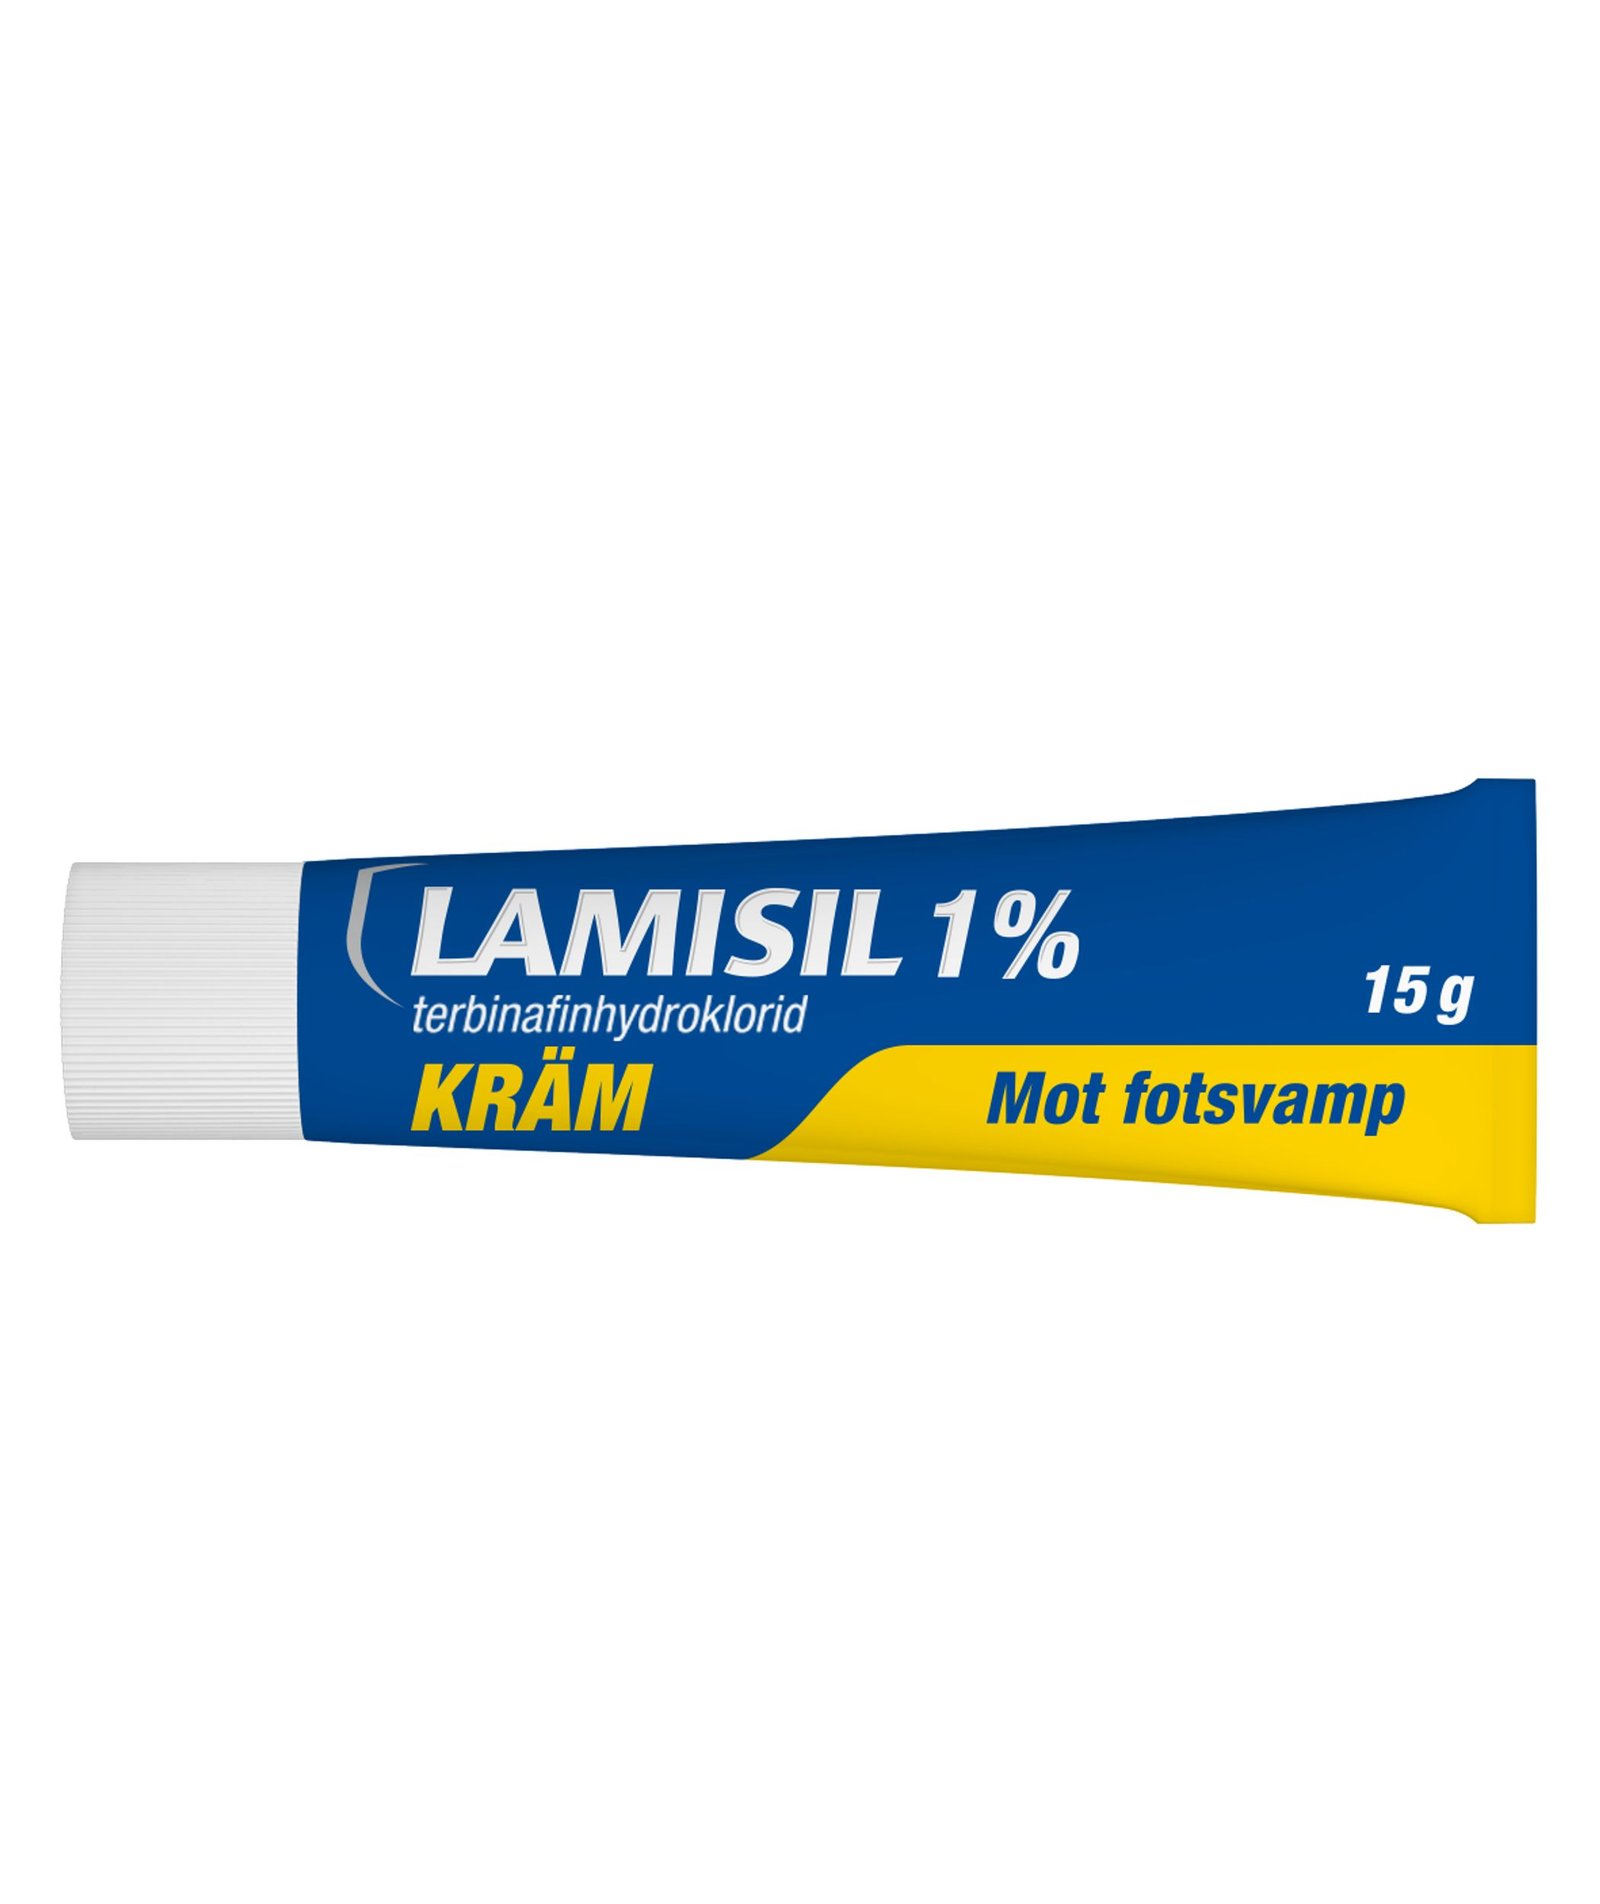 Lamisil Kräm 1%, 15 g